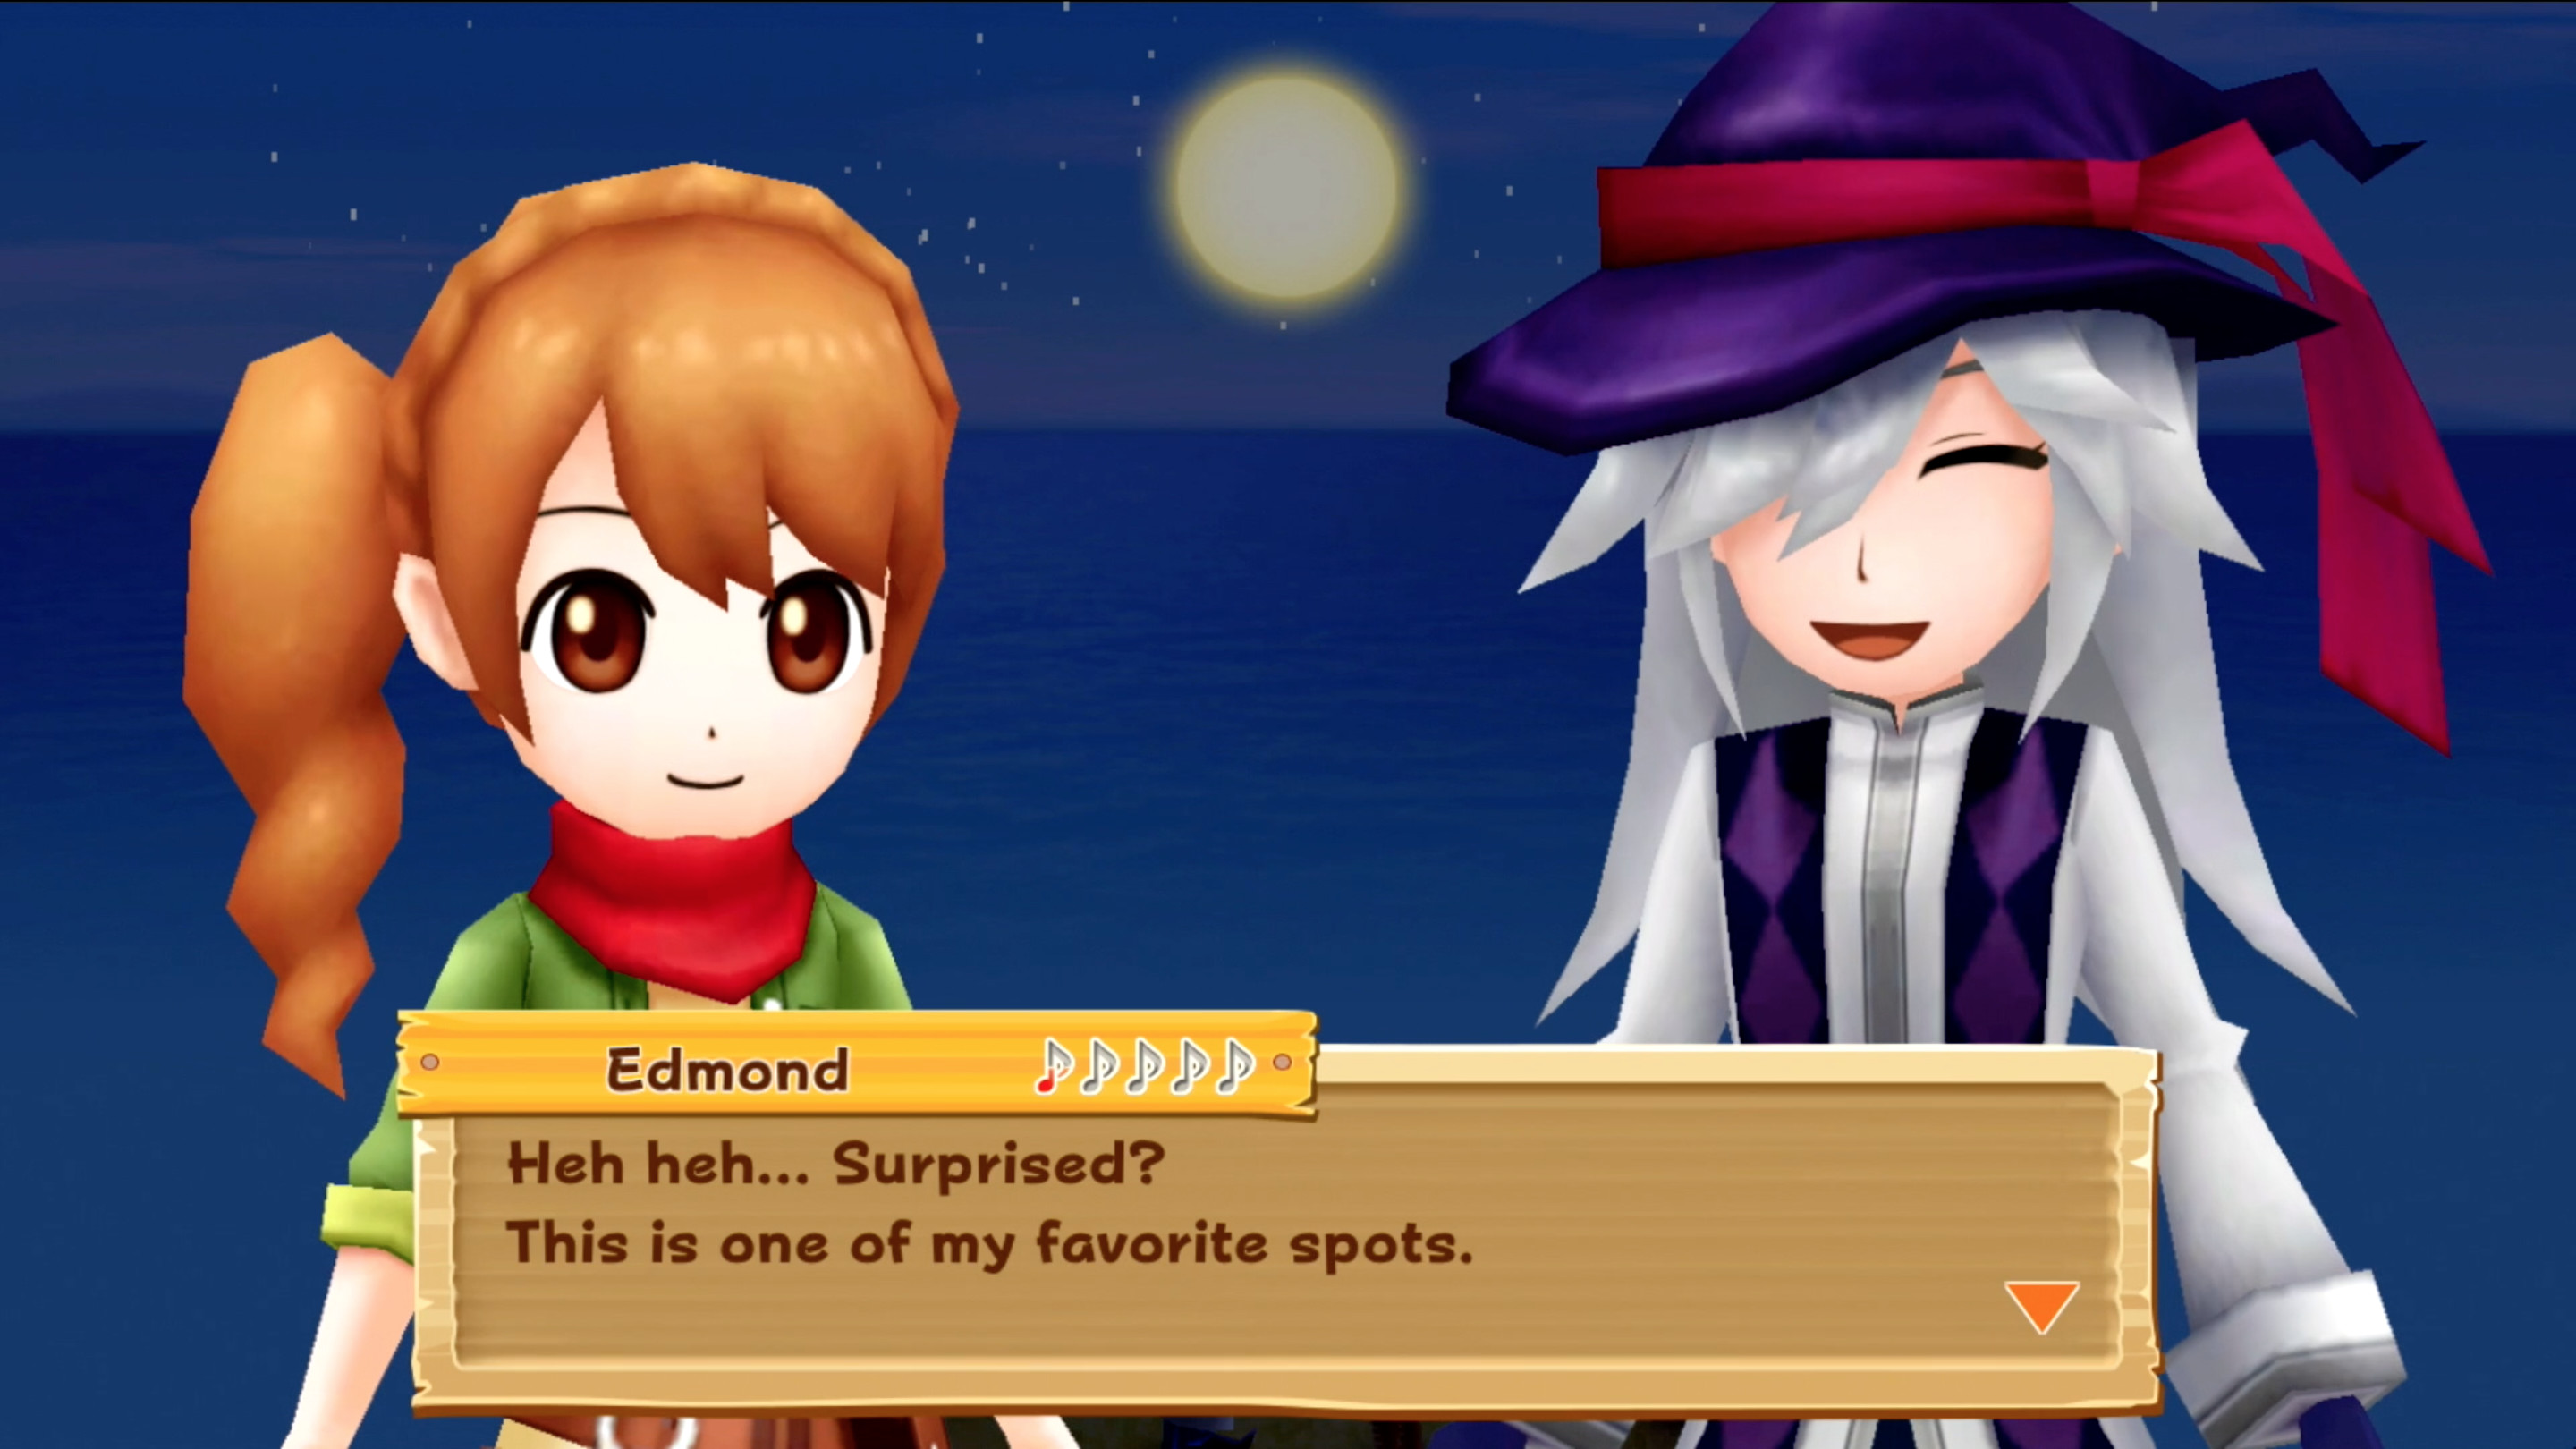 Harvest Moon: Light of Hope Special Edition screenshot